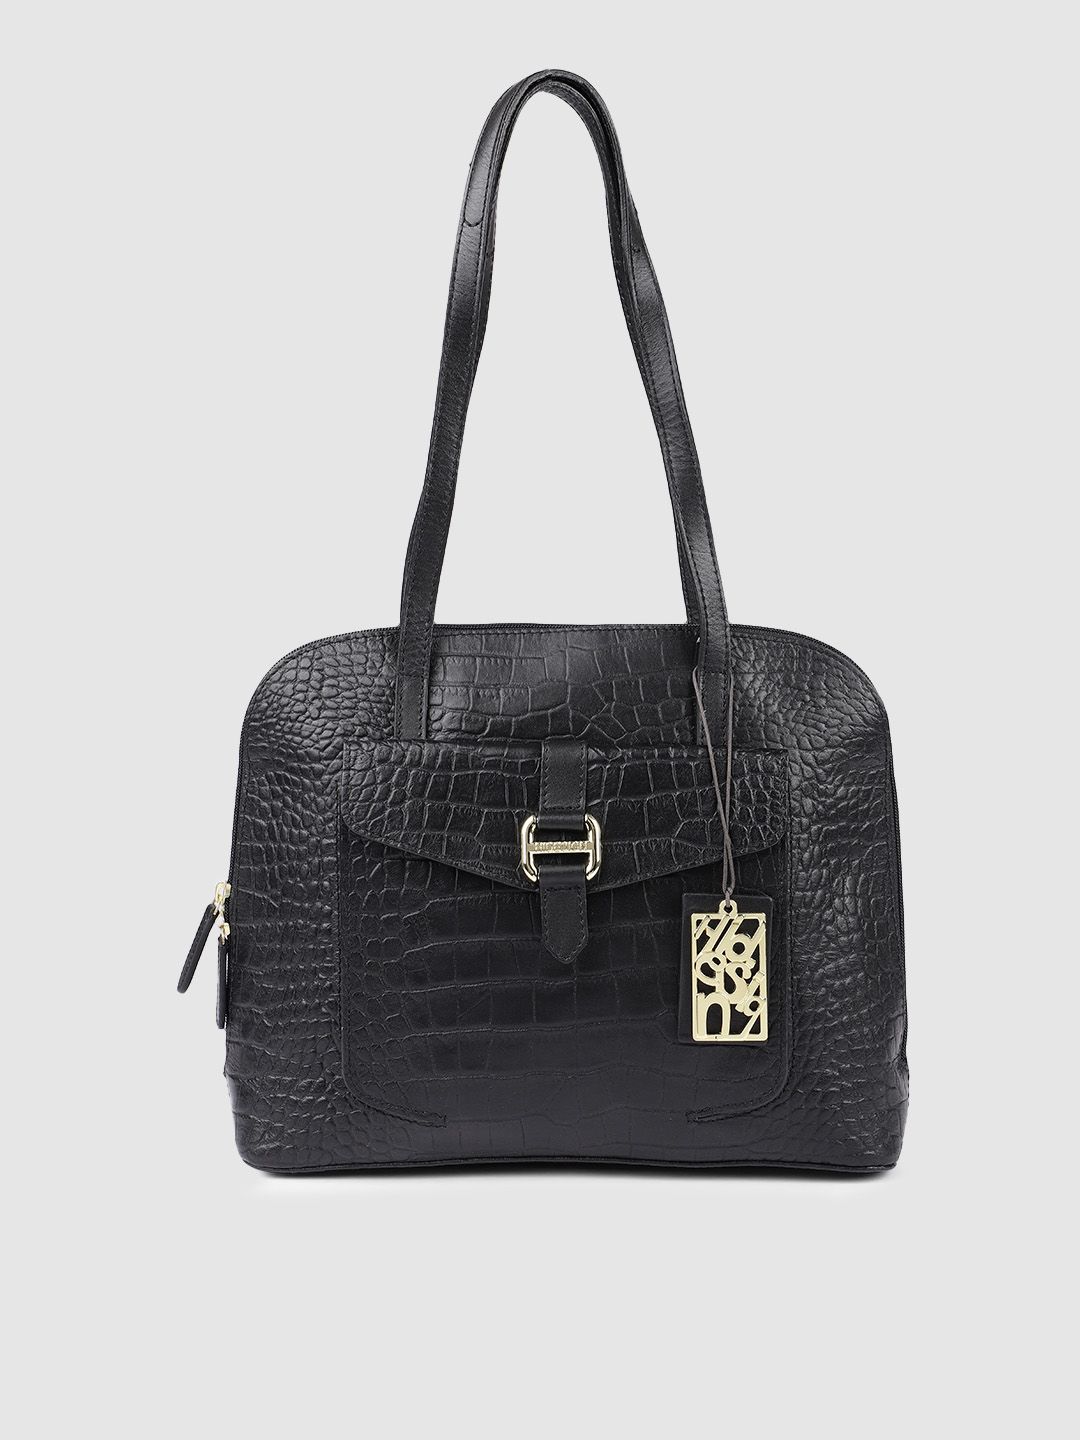 Hidesign Black Animal Textured Leather Shoulder Bag Price in India